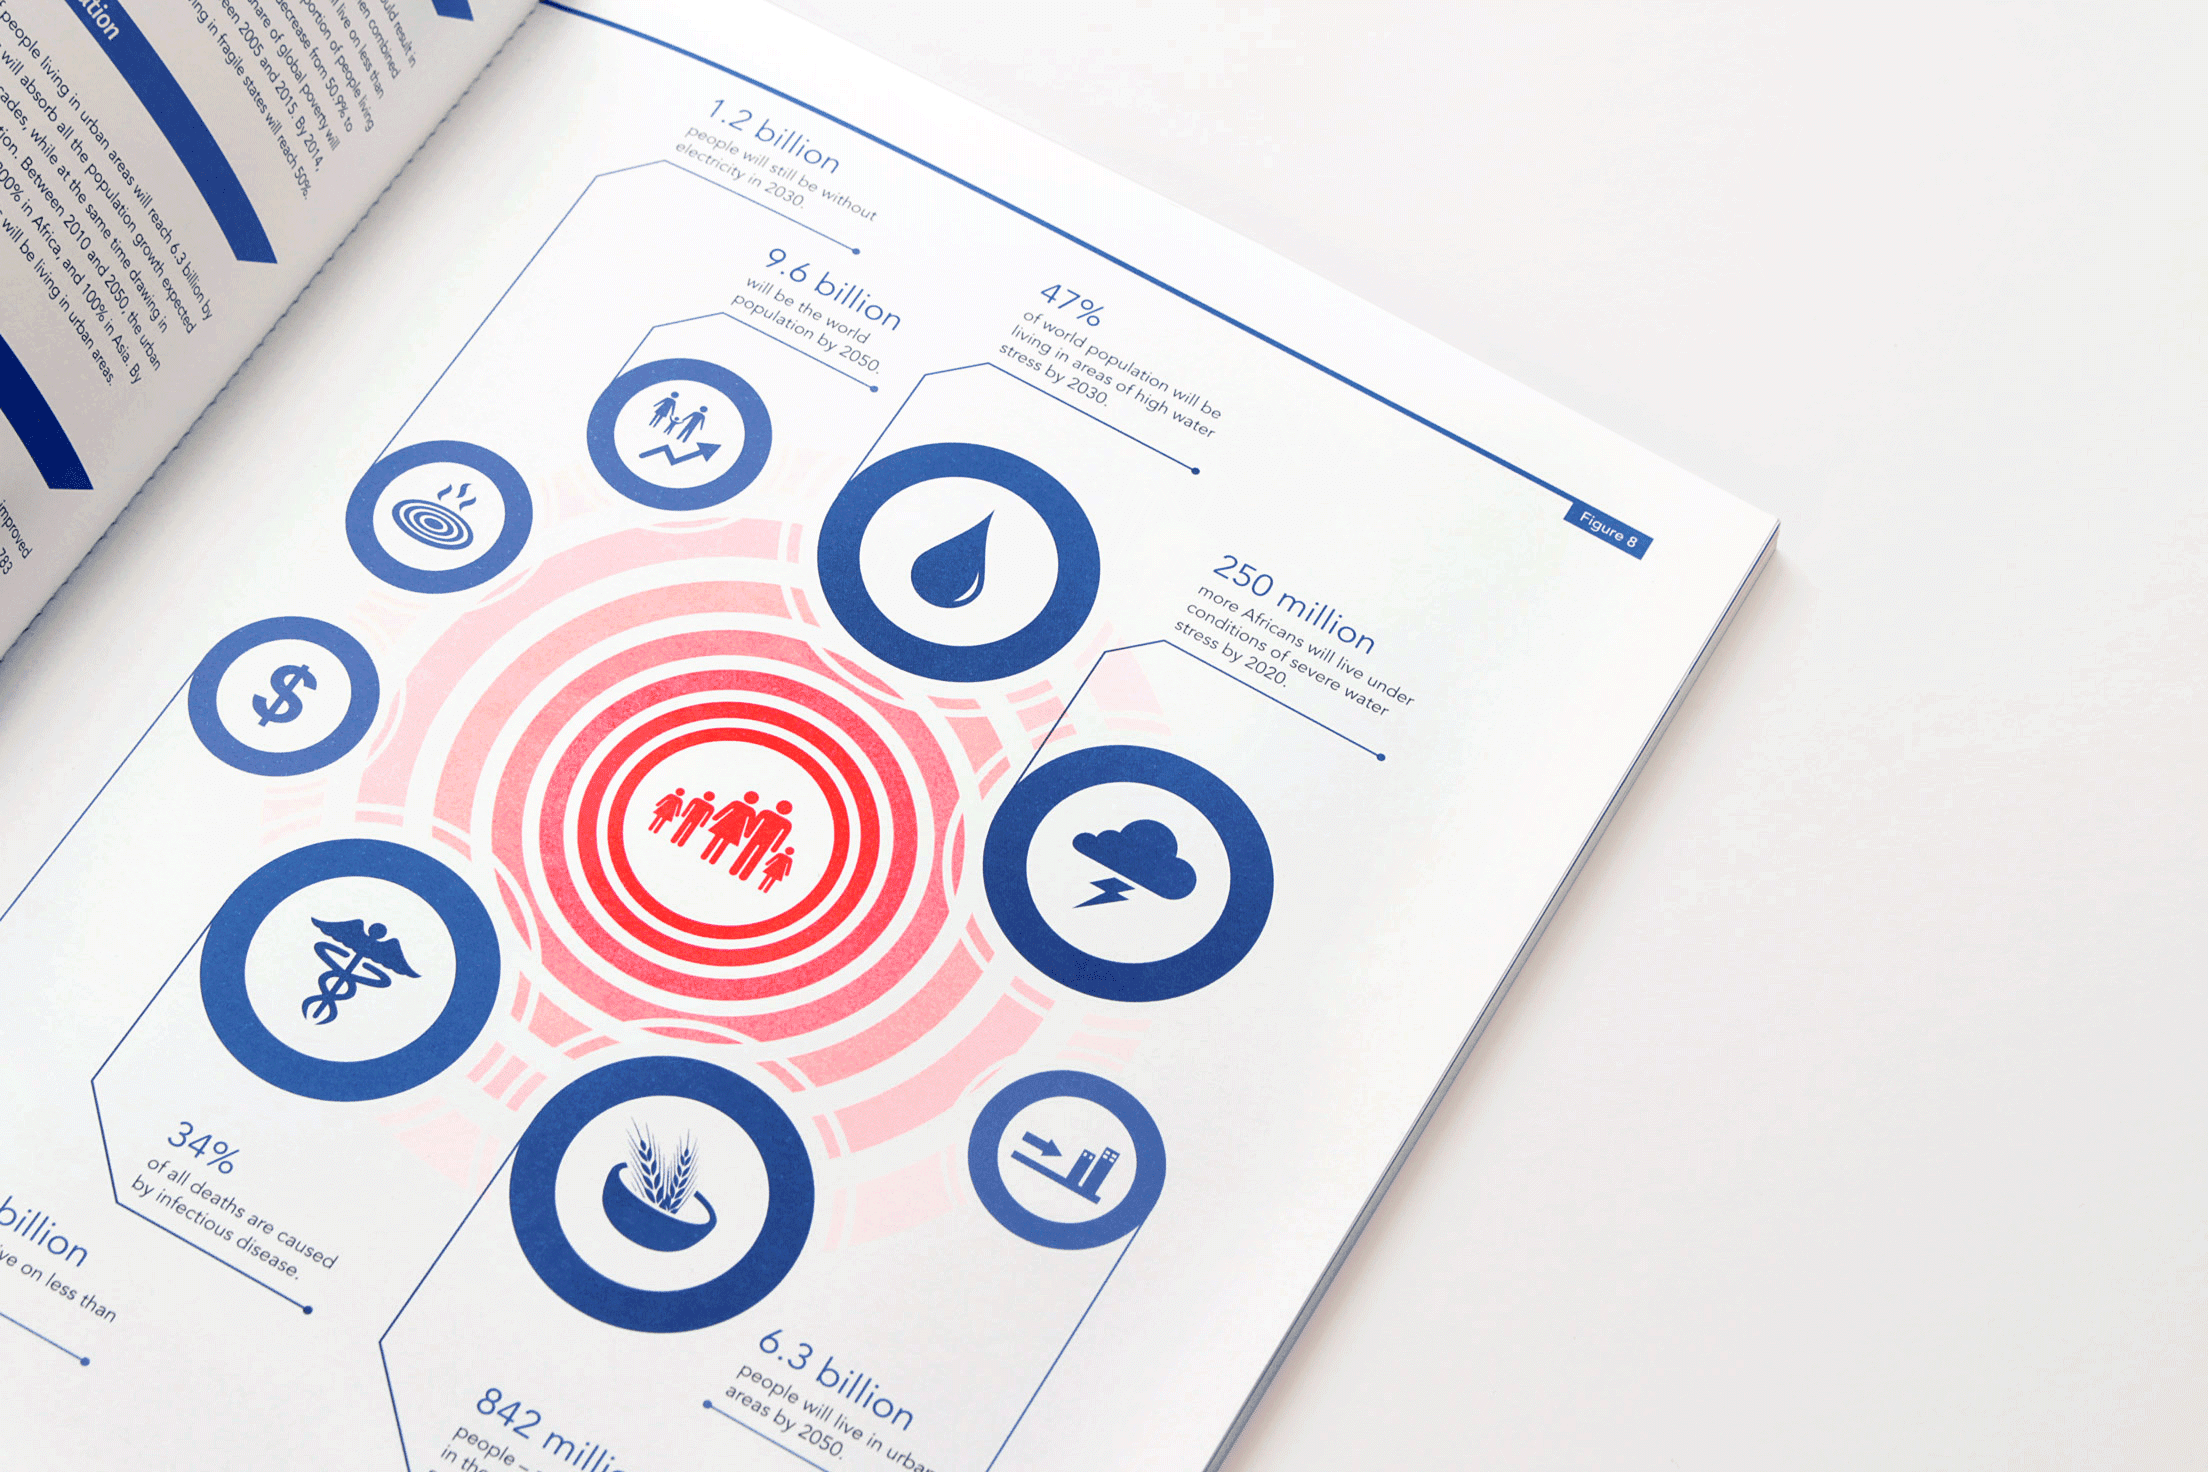 Diseño de infografia del informe "Saving lives today and tomorrow" de OCHA